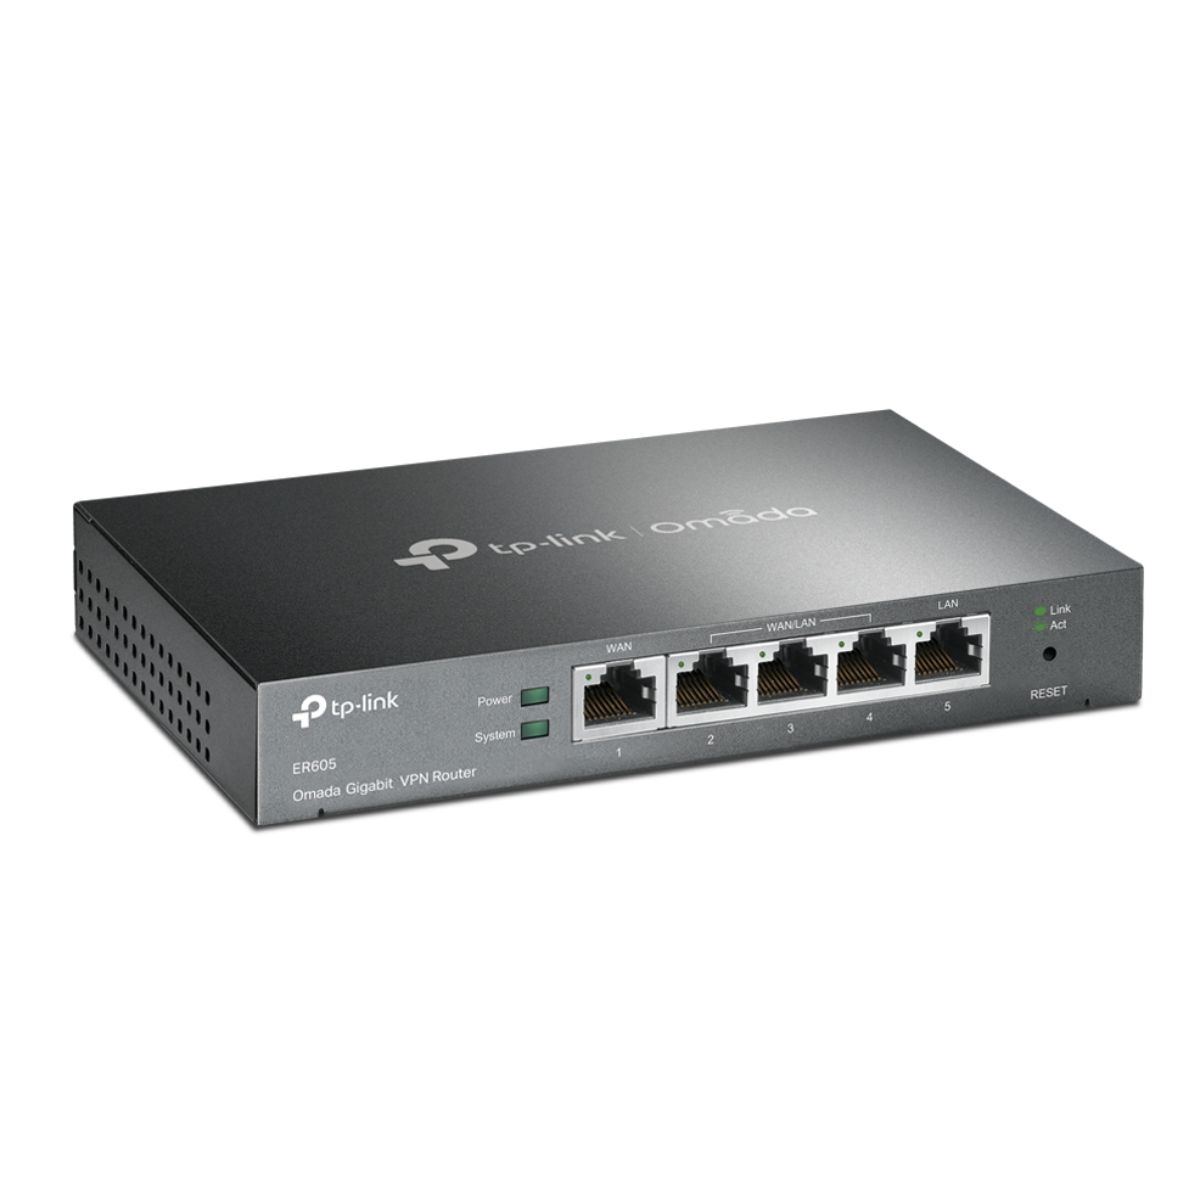 Bộ định tuyến Gigabit Multi-WAN VPN Router TP-Link ER605 1 cổng WAN gigabit và 3 cổng WAN/LAN gigabit